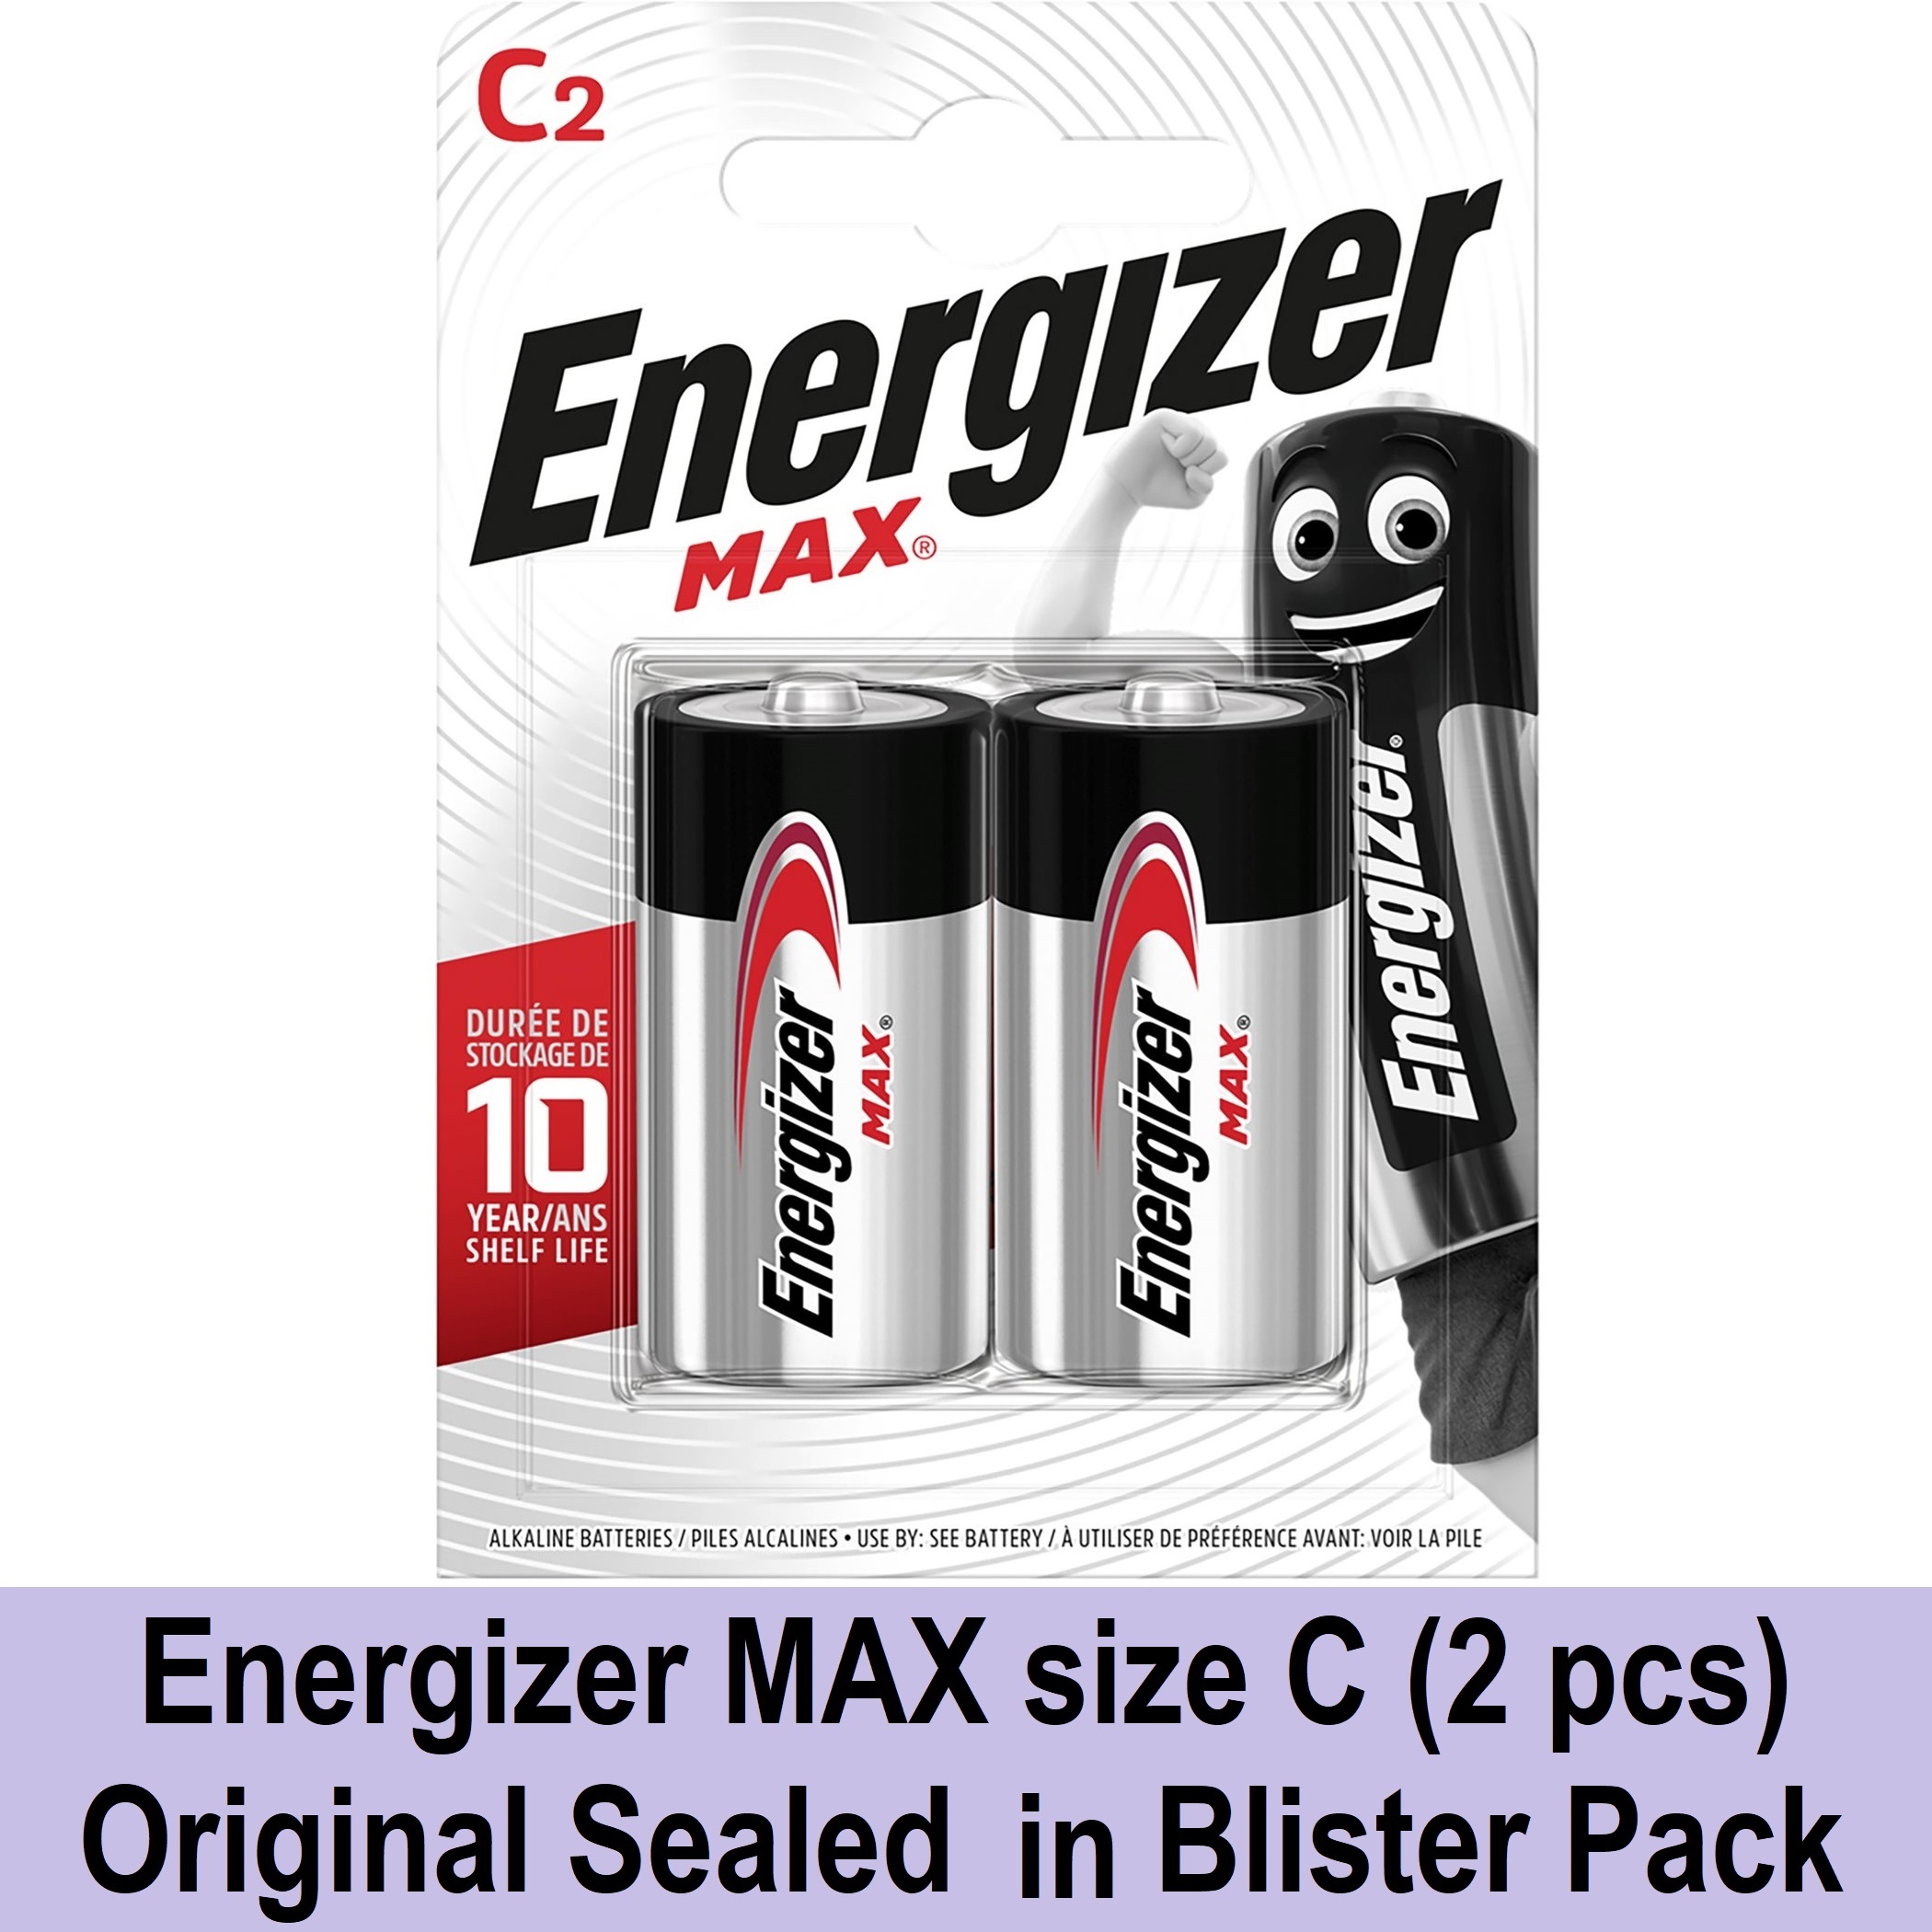 Energizer Max LR20 Pile LR20 (D2) alcaline(s) 1.5 V 2 pc(s)